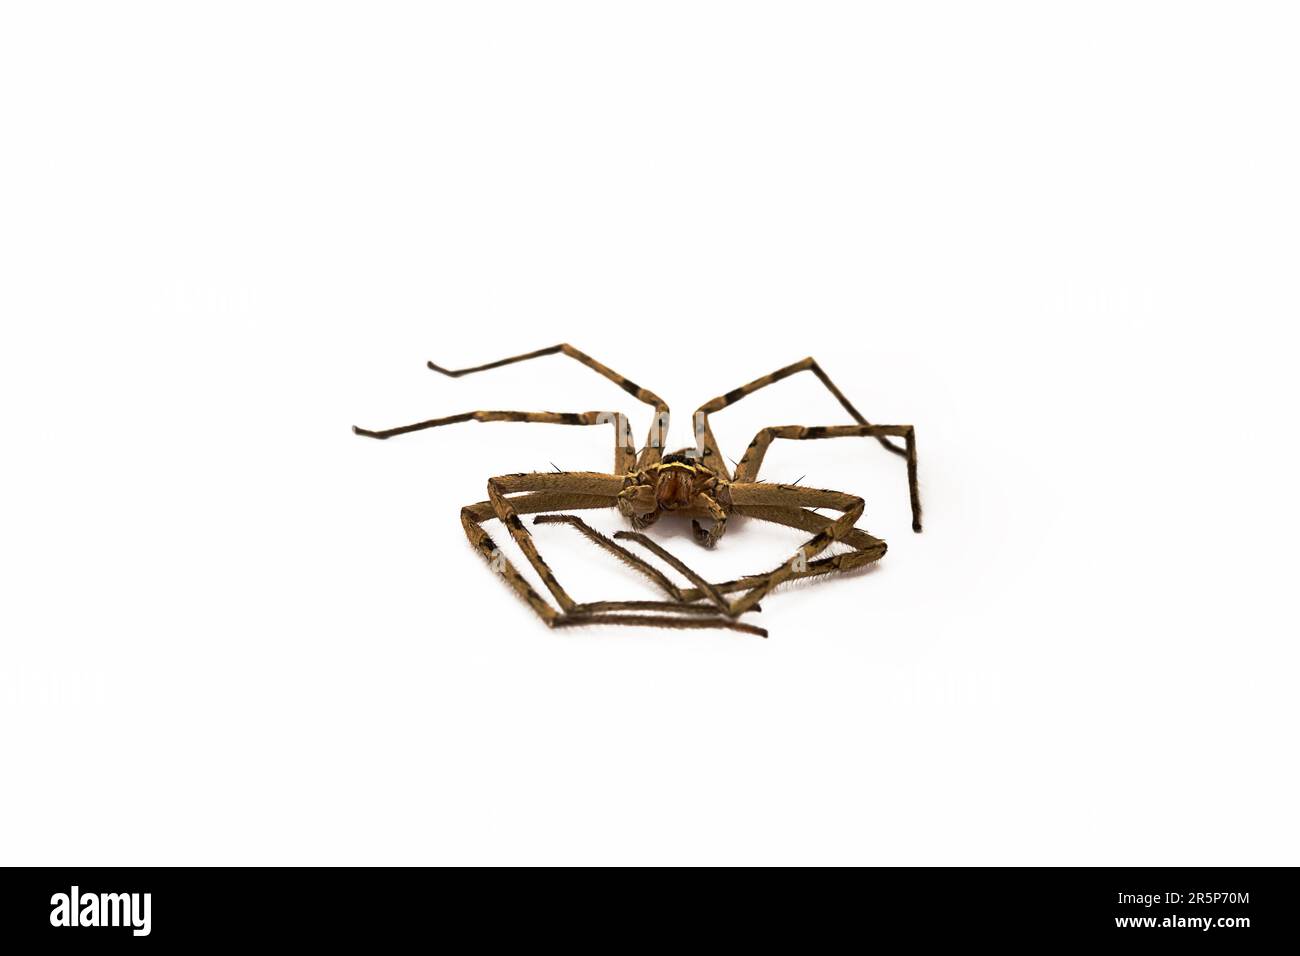 Died heteropoda venatoria huntsman giant crab spider on white. Stock Photo